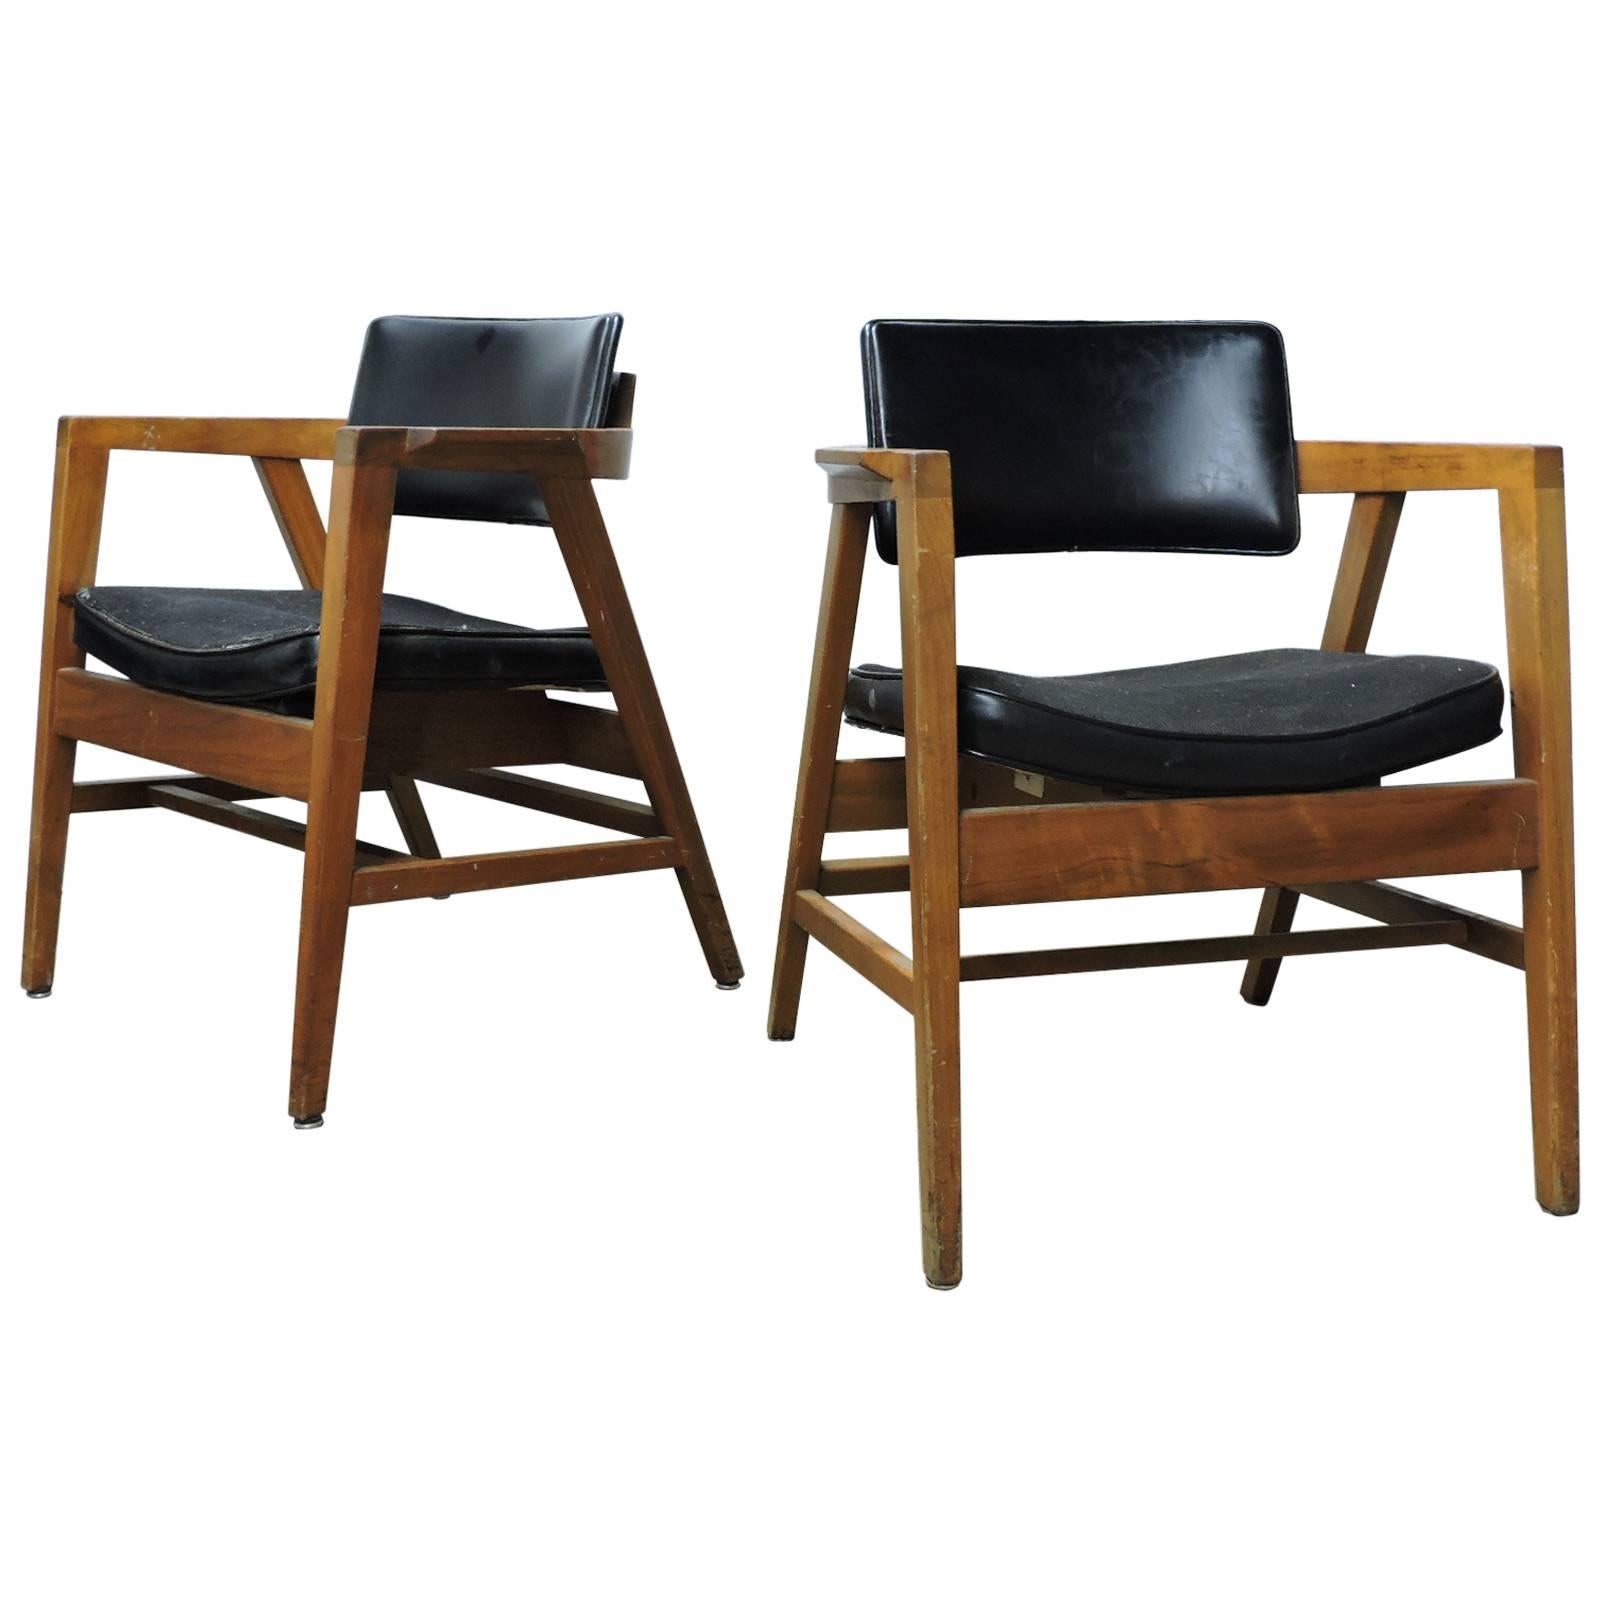 Mid-20th Century American Modern Lounge Chairs by Gunlocke